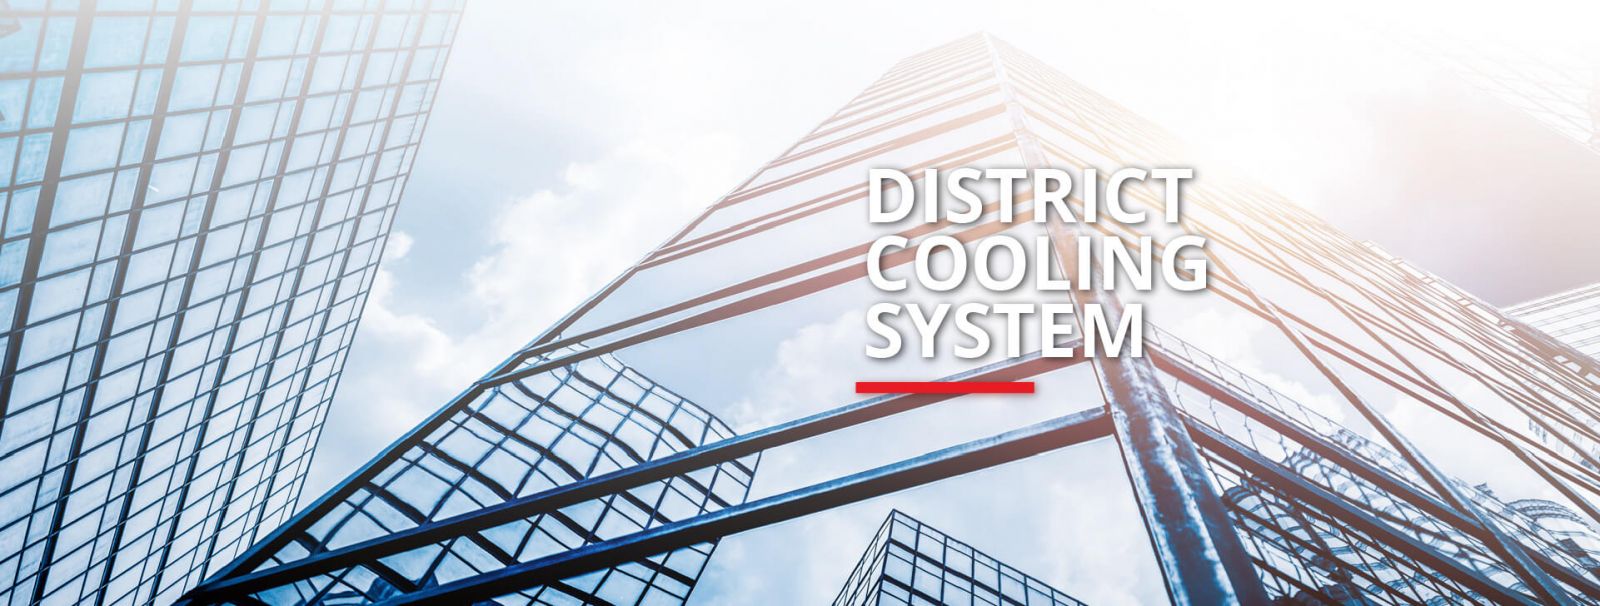 district cooling system banner